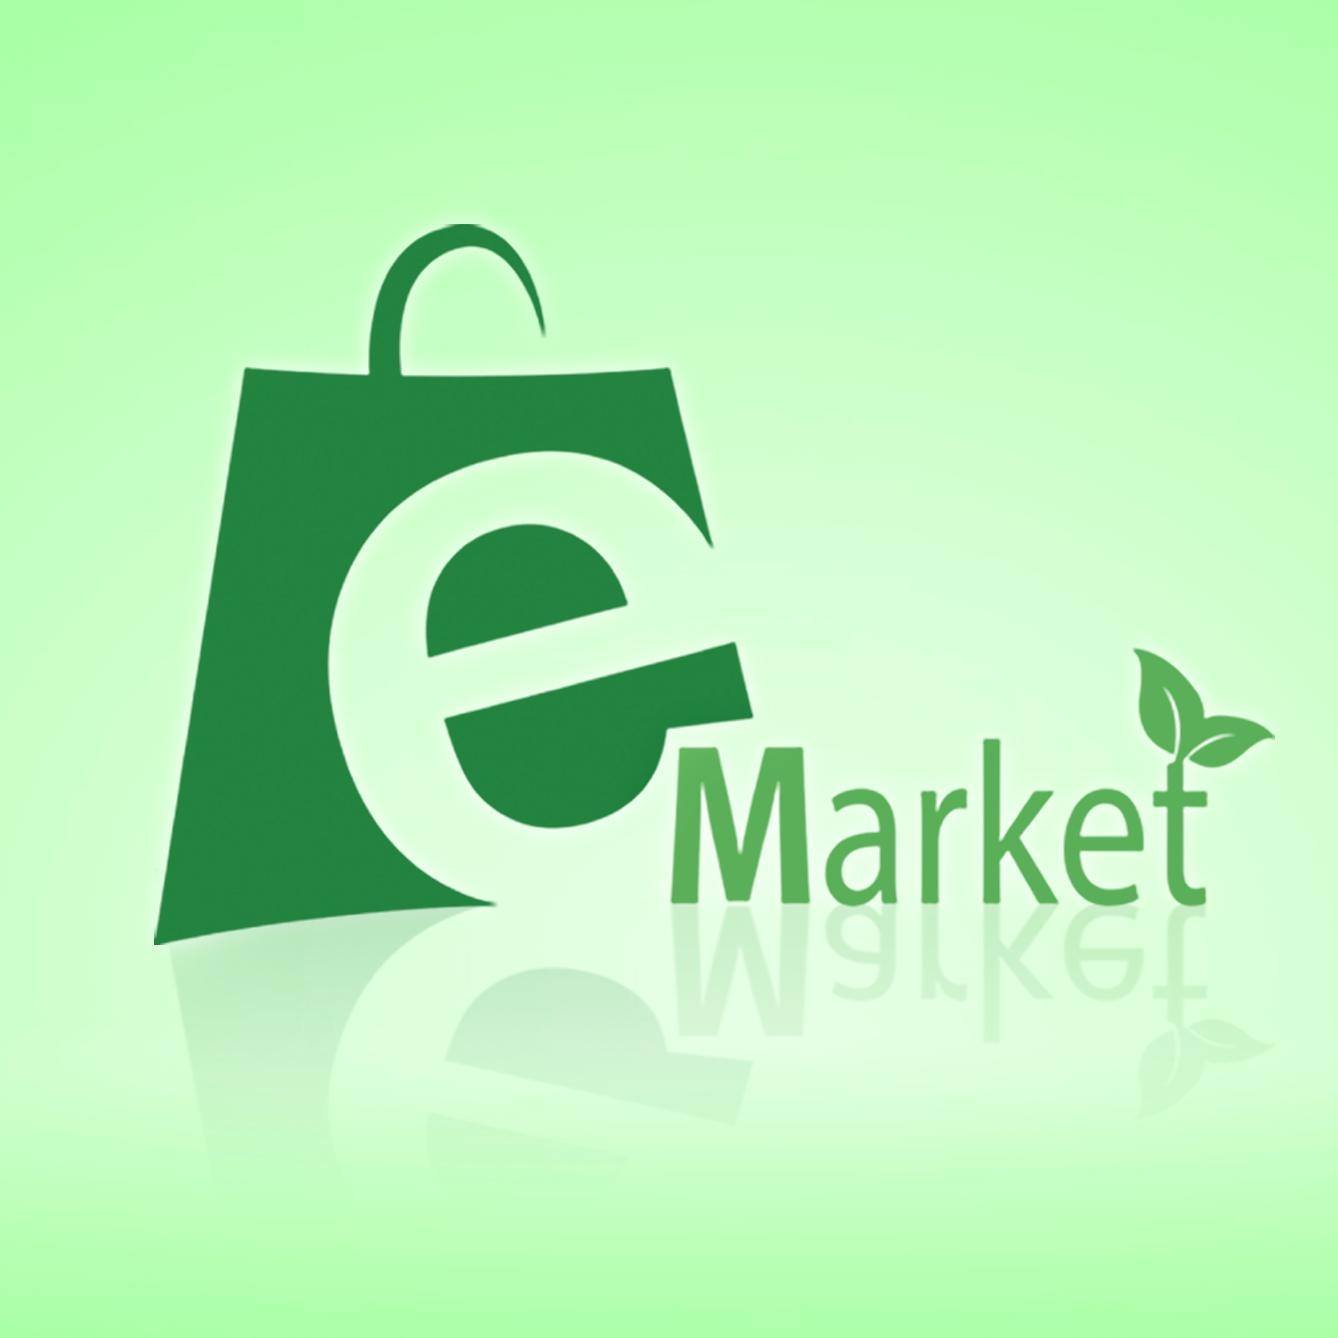 E-Market